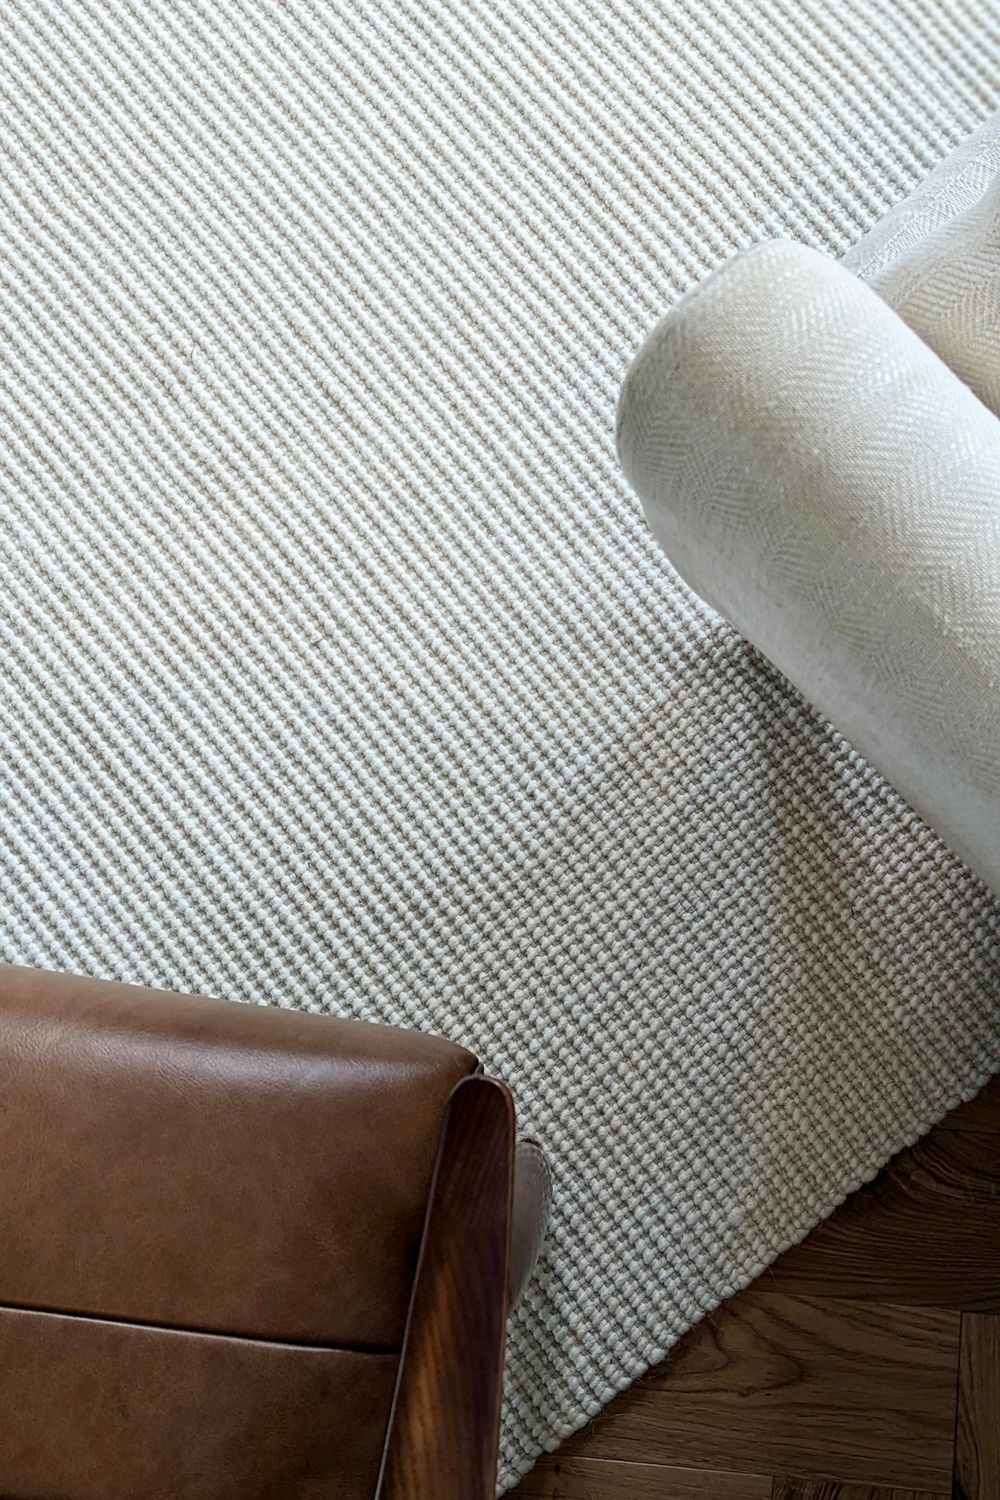 Simple white textured flatweave rug